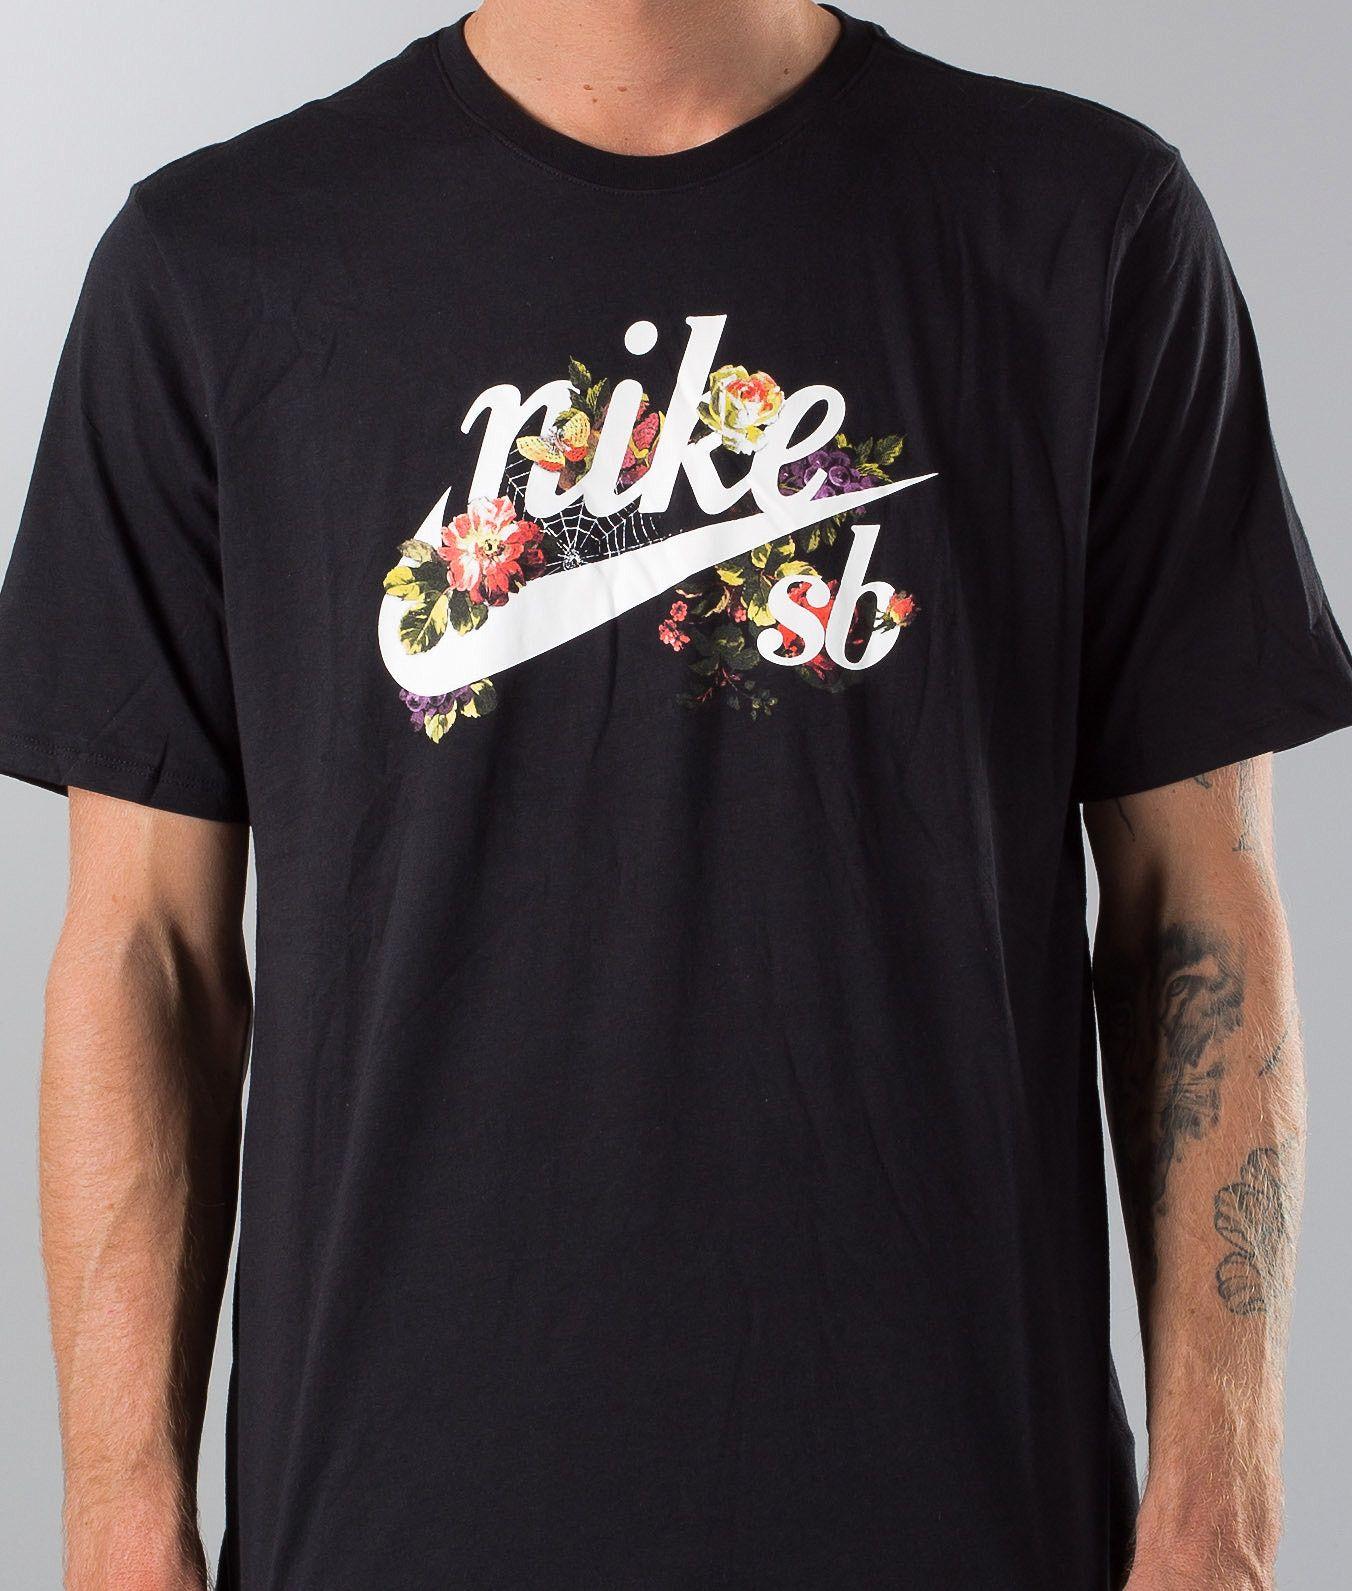 Nike Floral Logo - Nike Floral Logo T-shirt Black/White - Ridestore.com